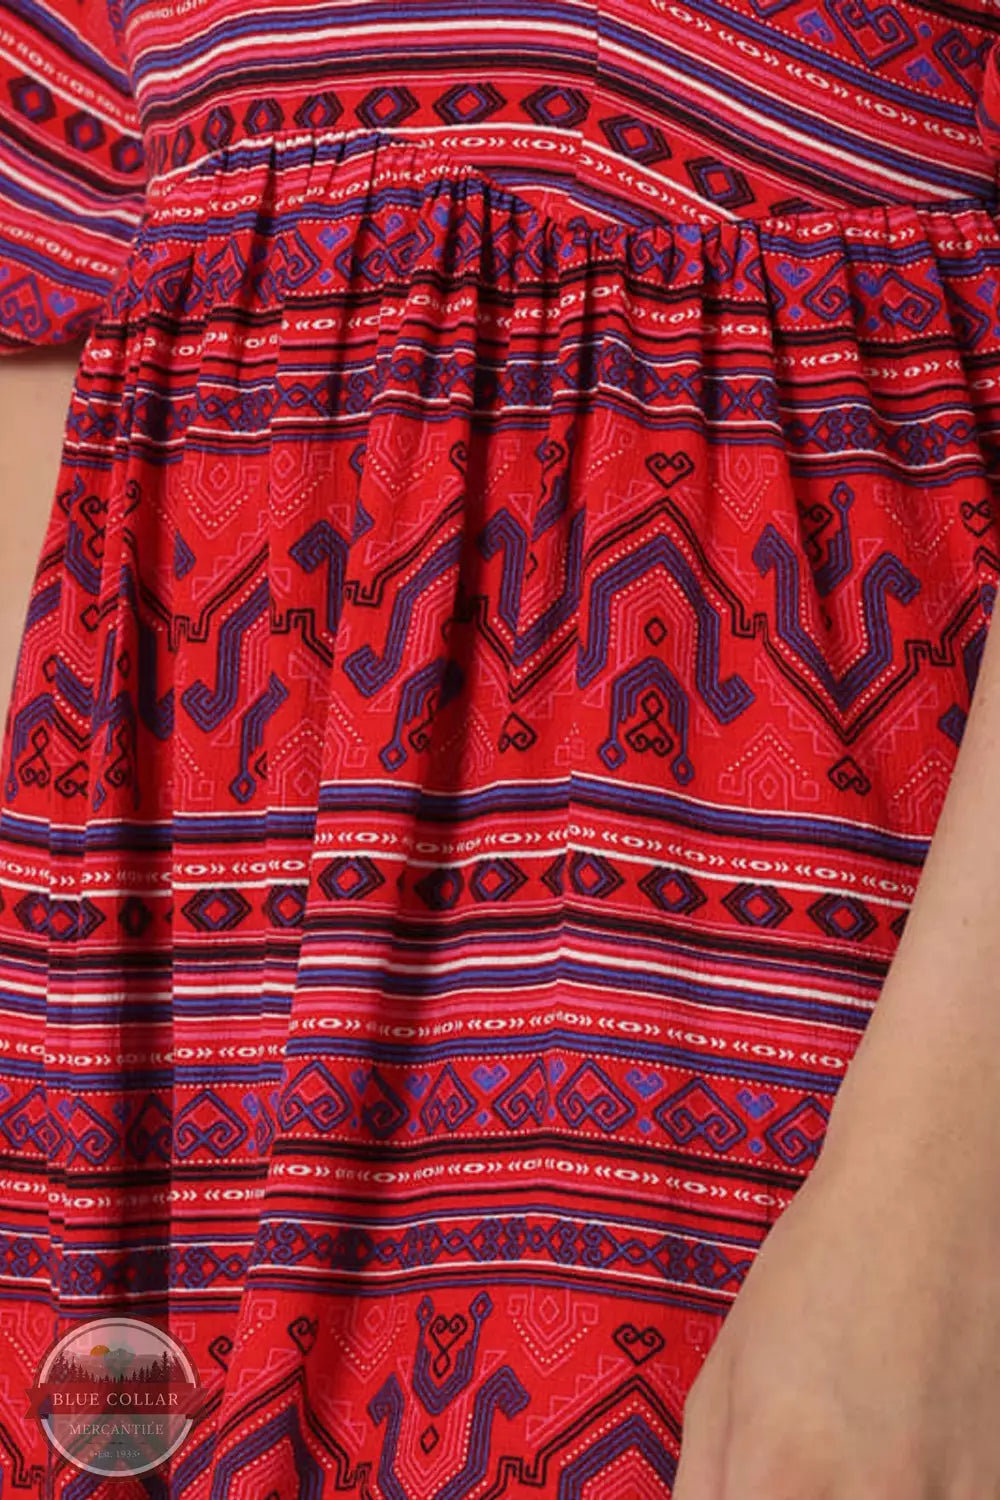 Wrangler 112336453 Retro Americana Half Sleeve Dress in a Red Aztec Print Detail View